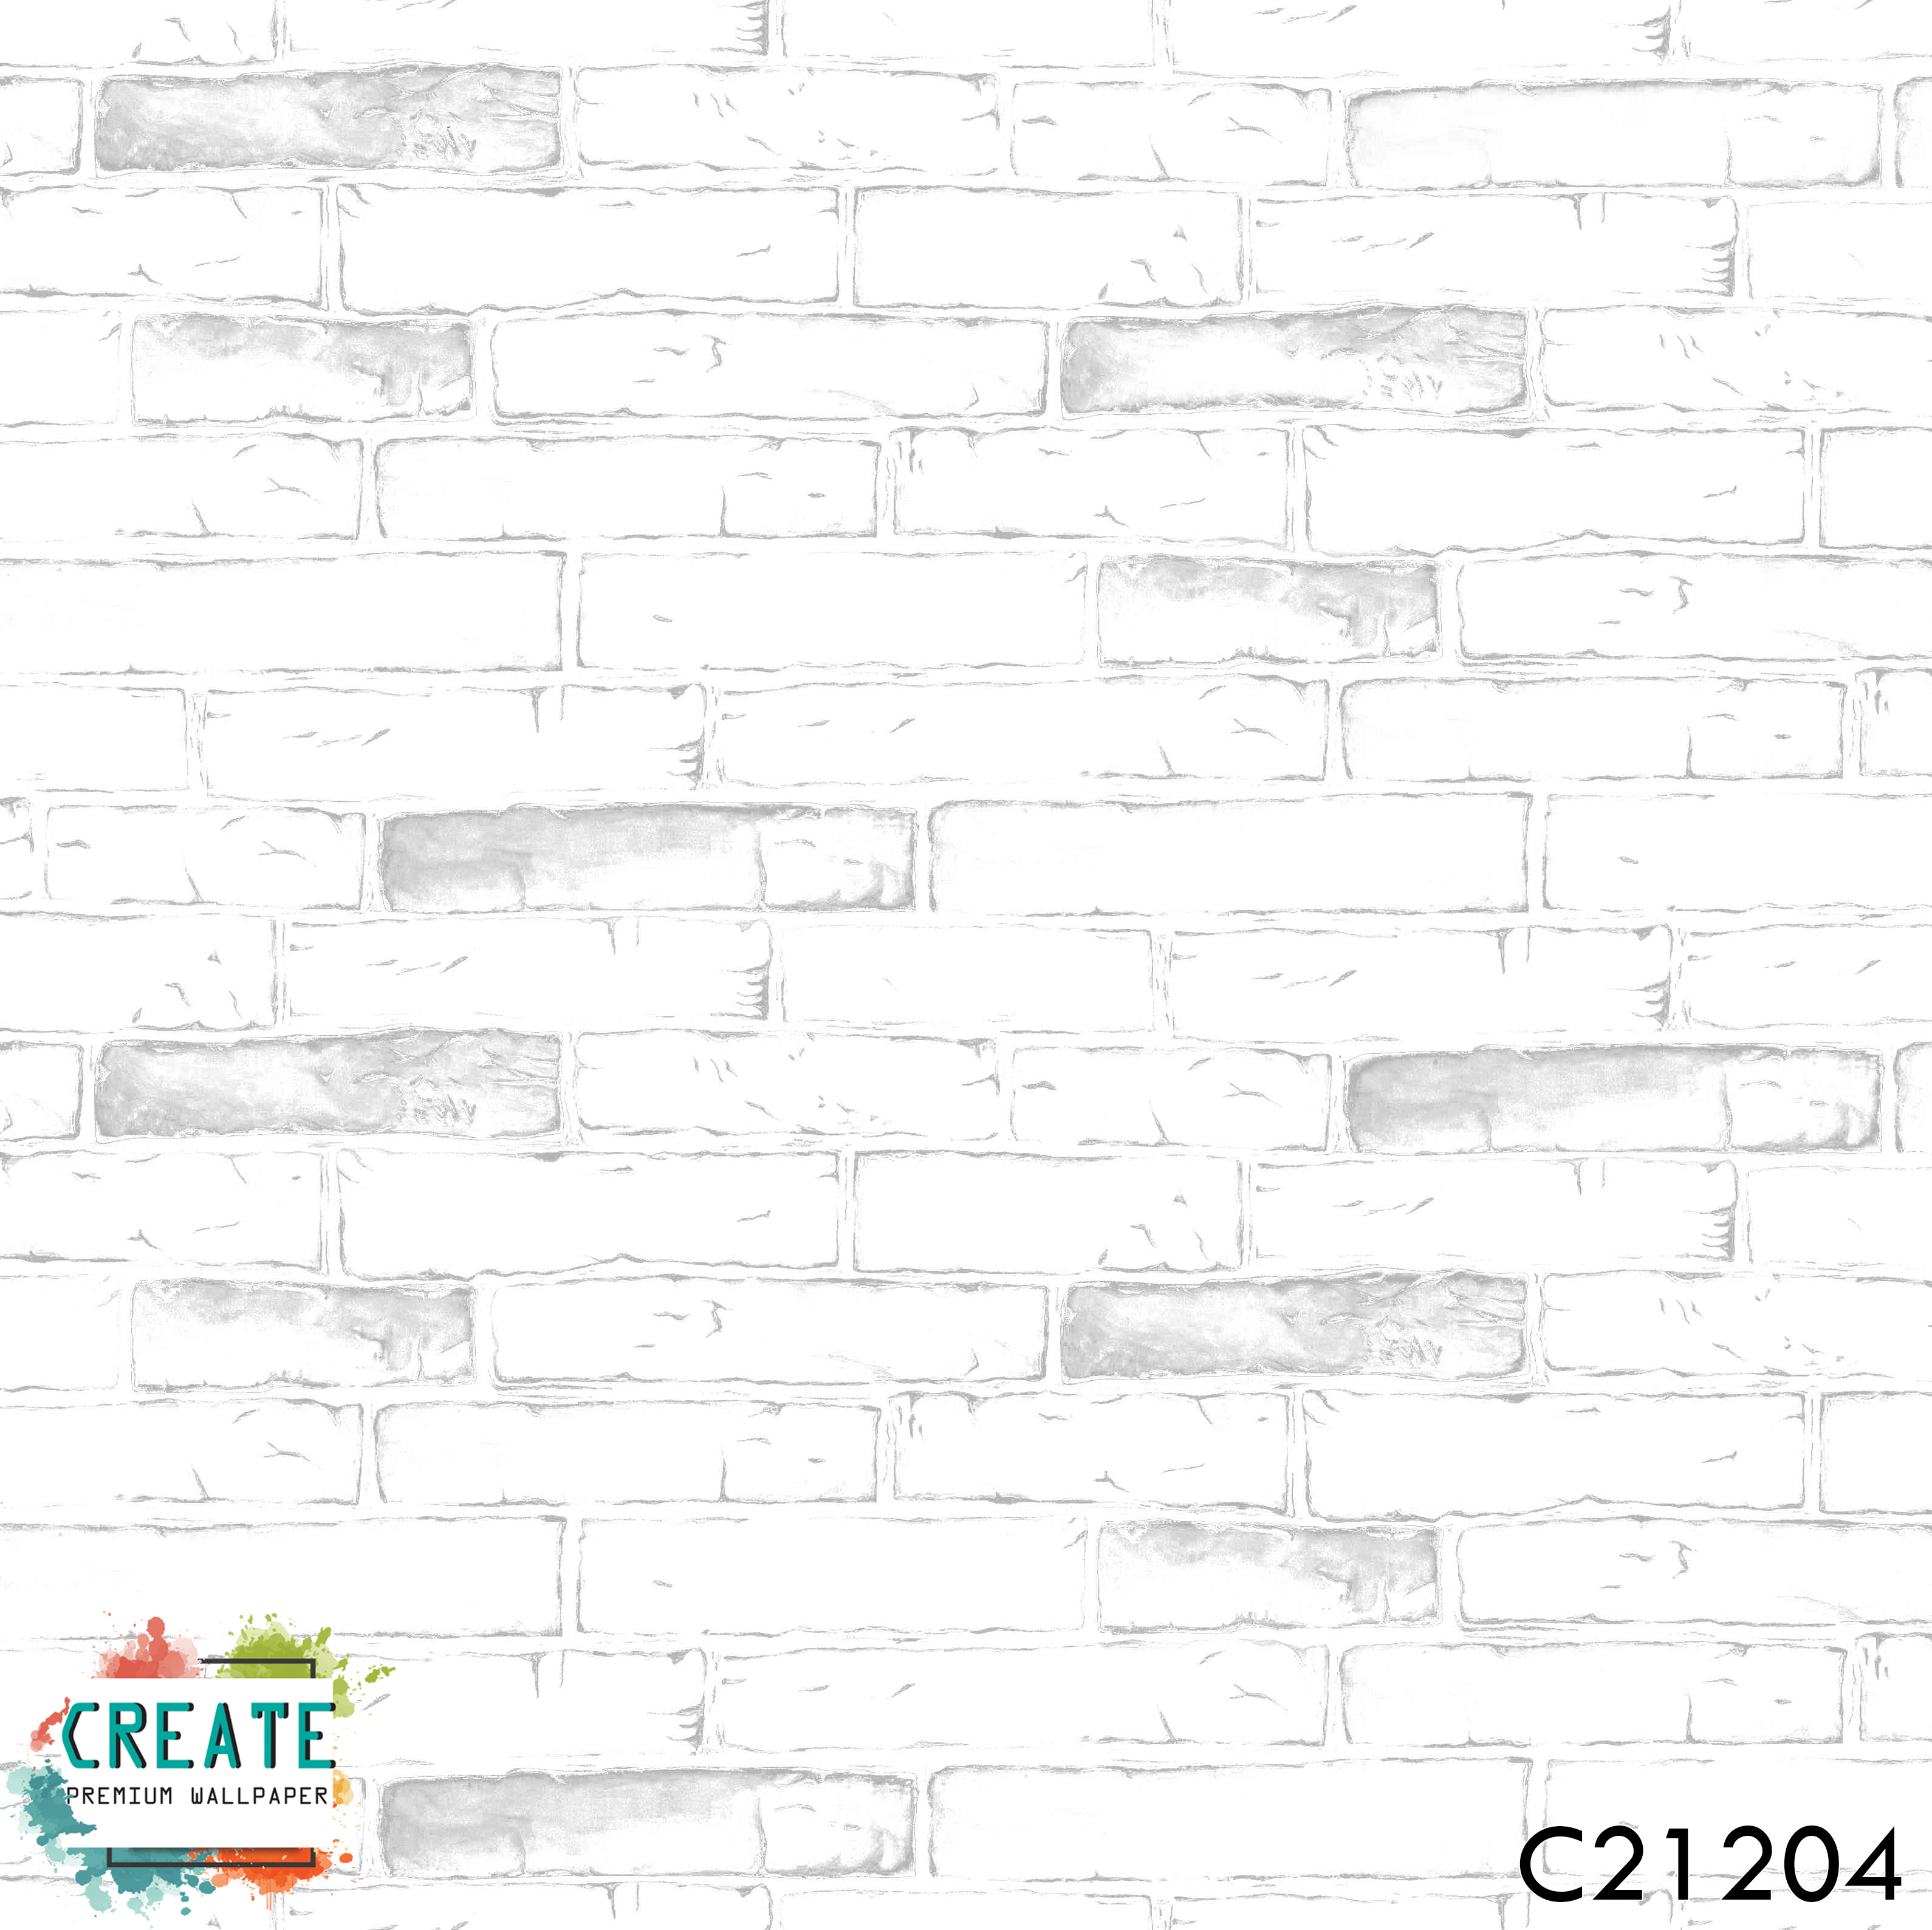 Wallpaper (CREATE) C21204